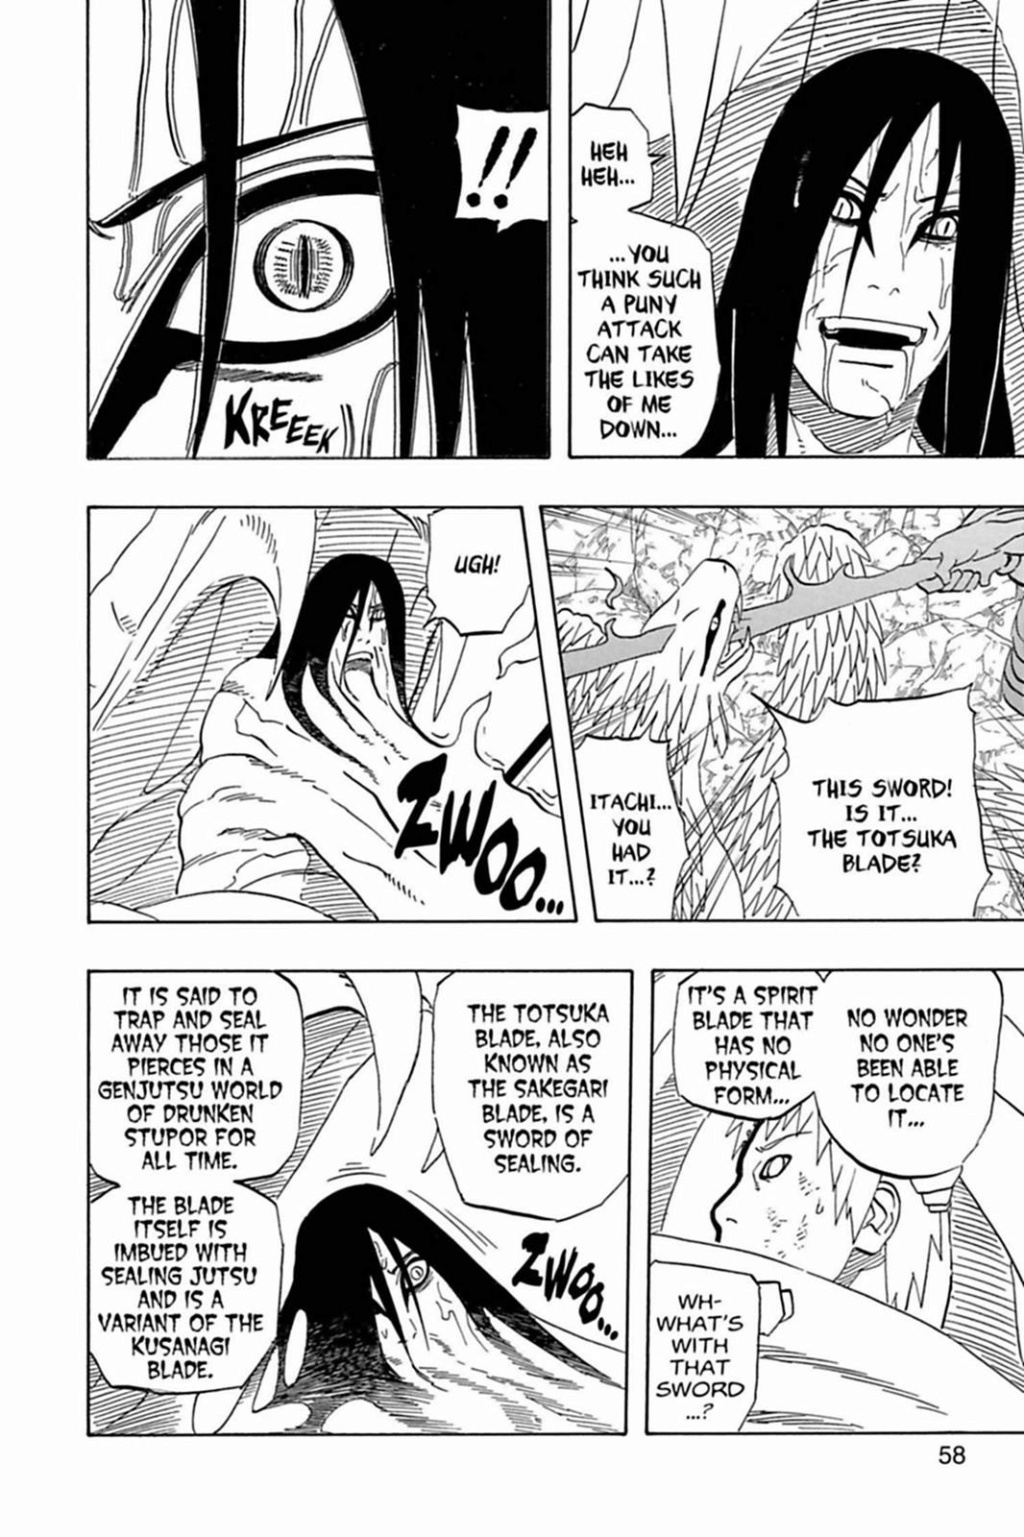 Sakura Novel vs Naruto 4 Caldas - Página 4 Varian11